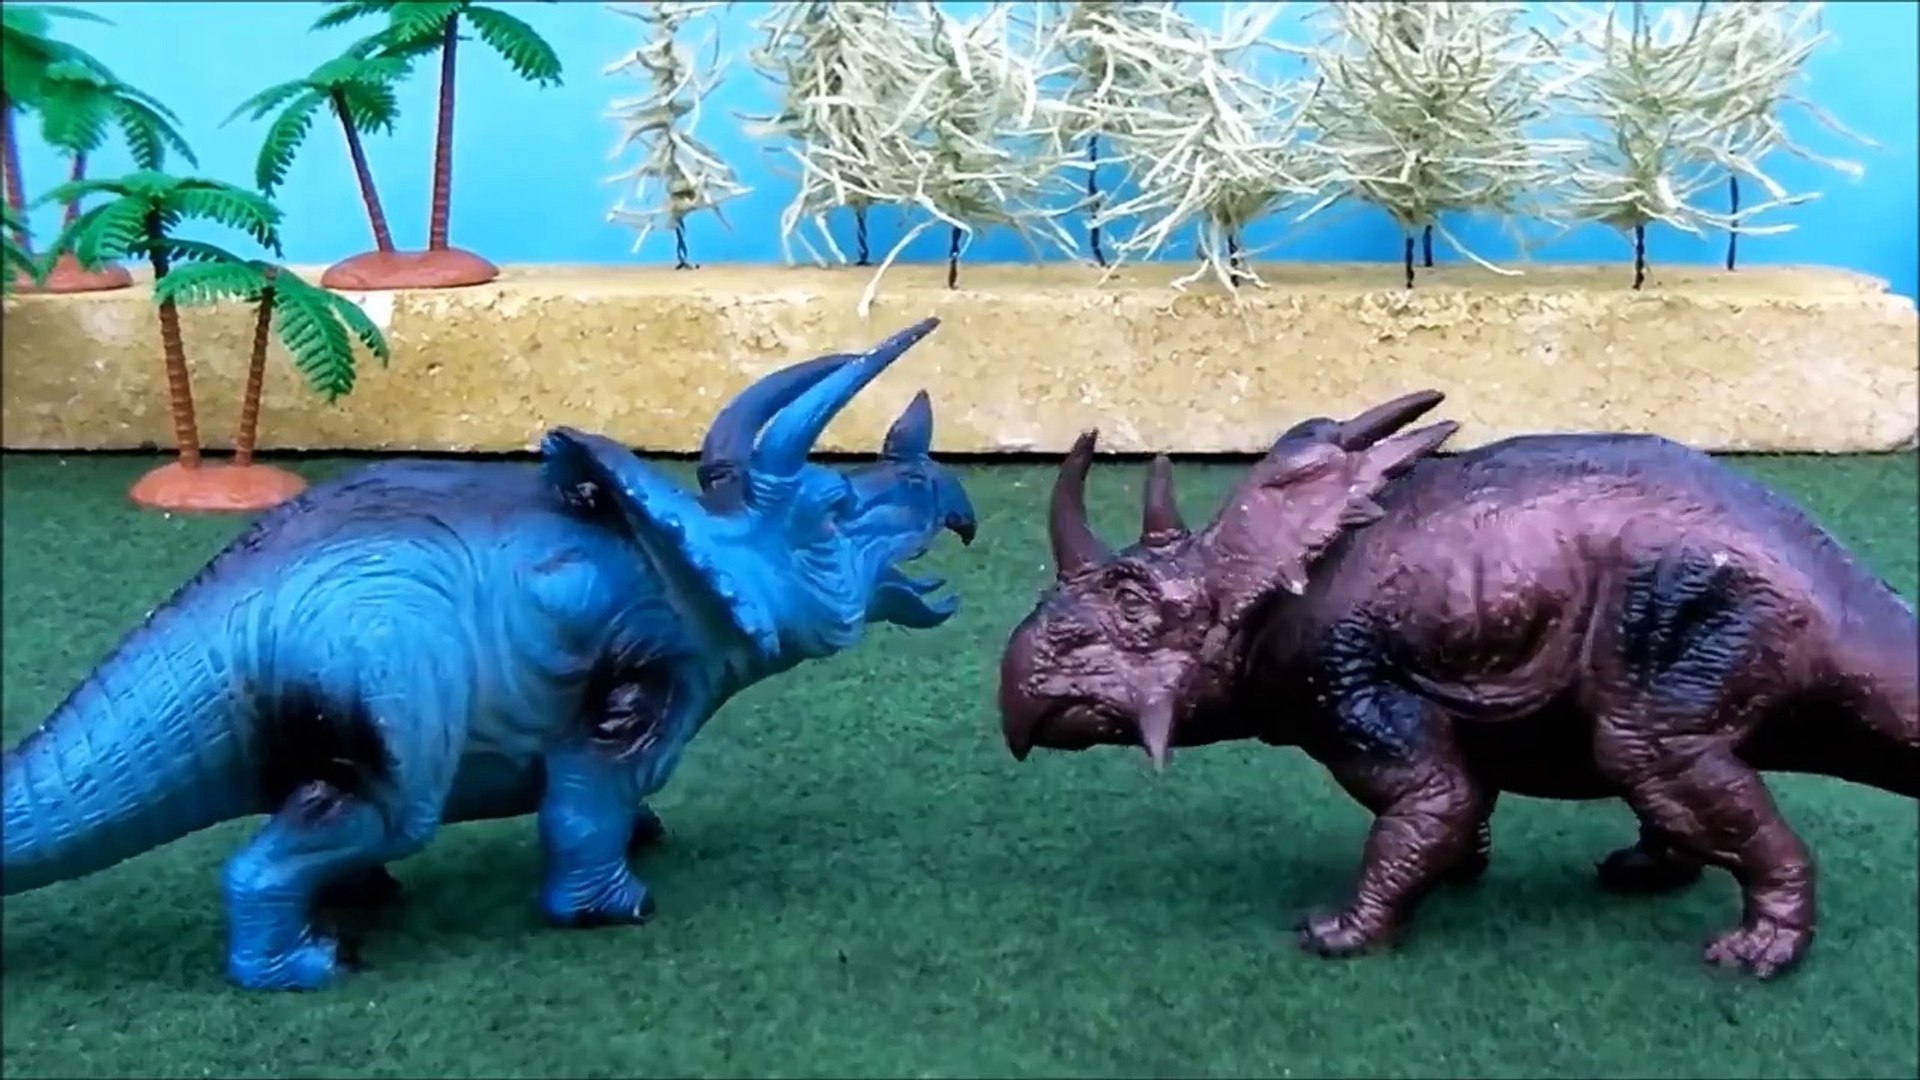 Dinosaur Fighting In Jurassic Park! Dinosaurs Battle! Video For Kids! -  Dailymotion Video